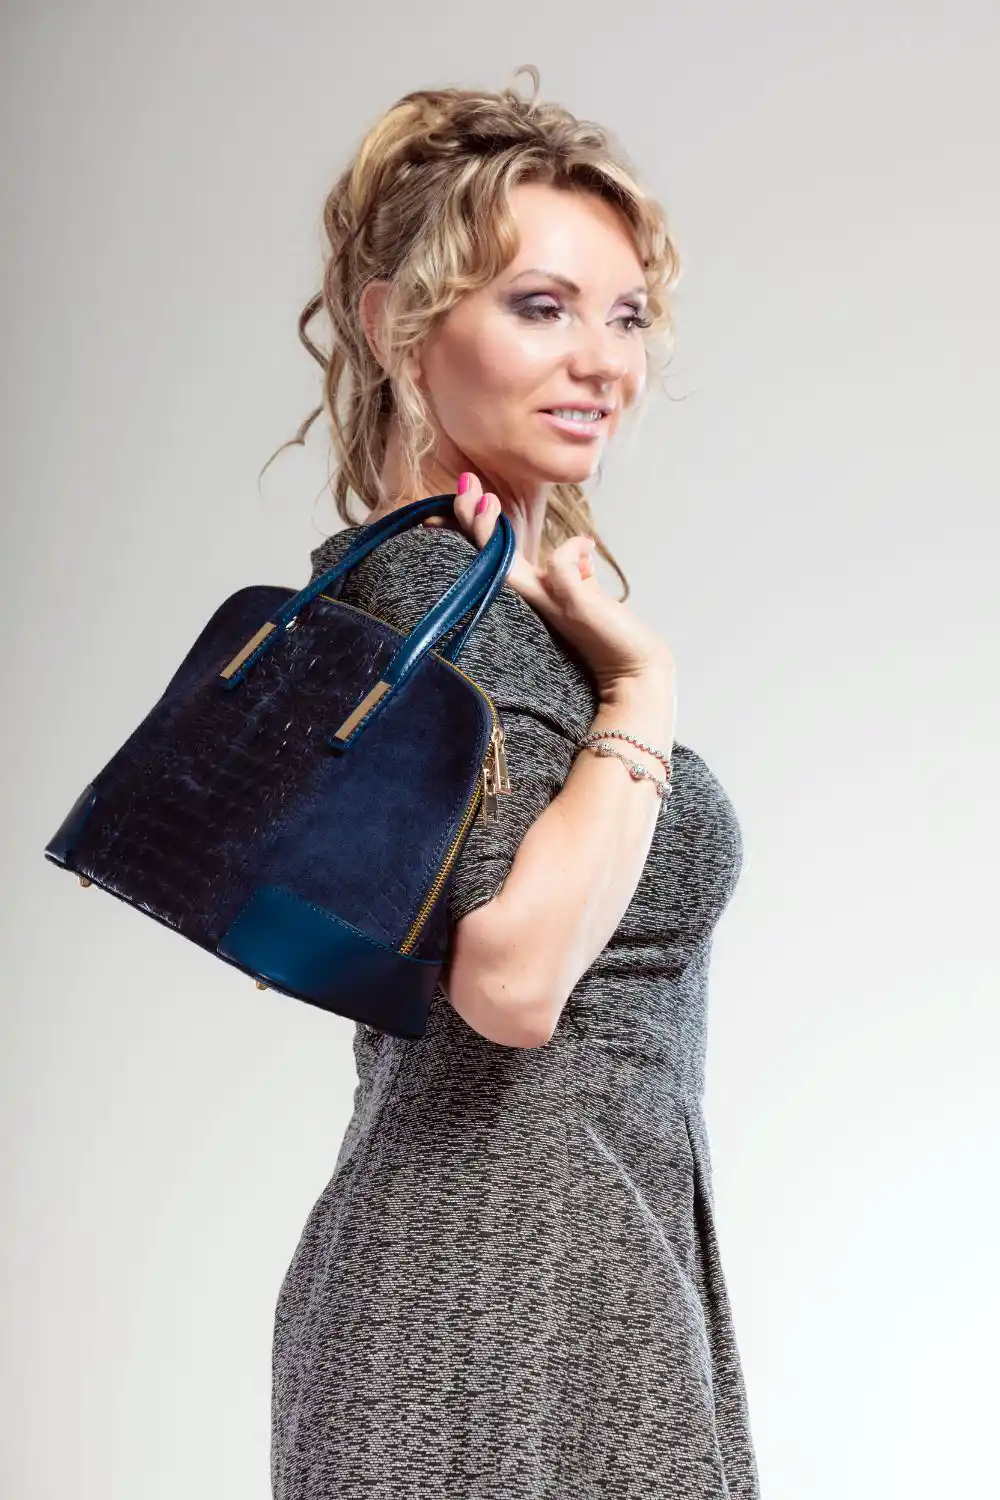 Mature lady with handbag